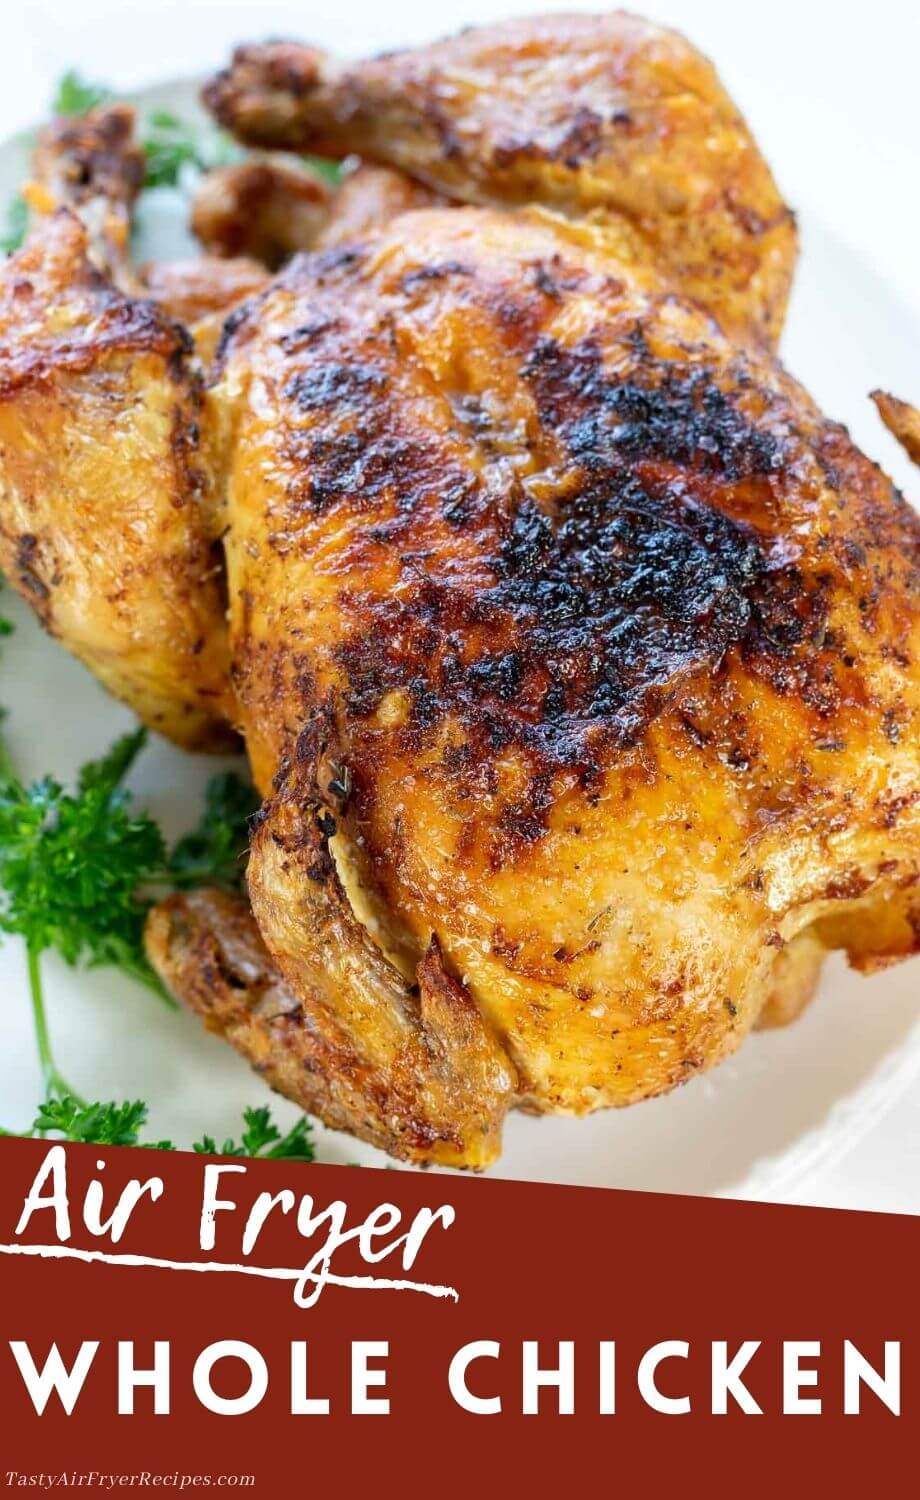 AIR FRYER WHOLE CHICKEN + Tasty Air Fryer Recipes